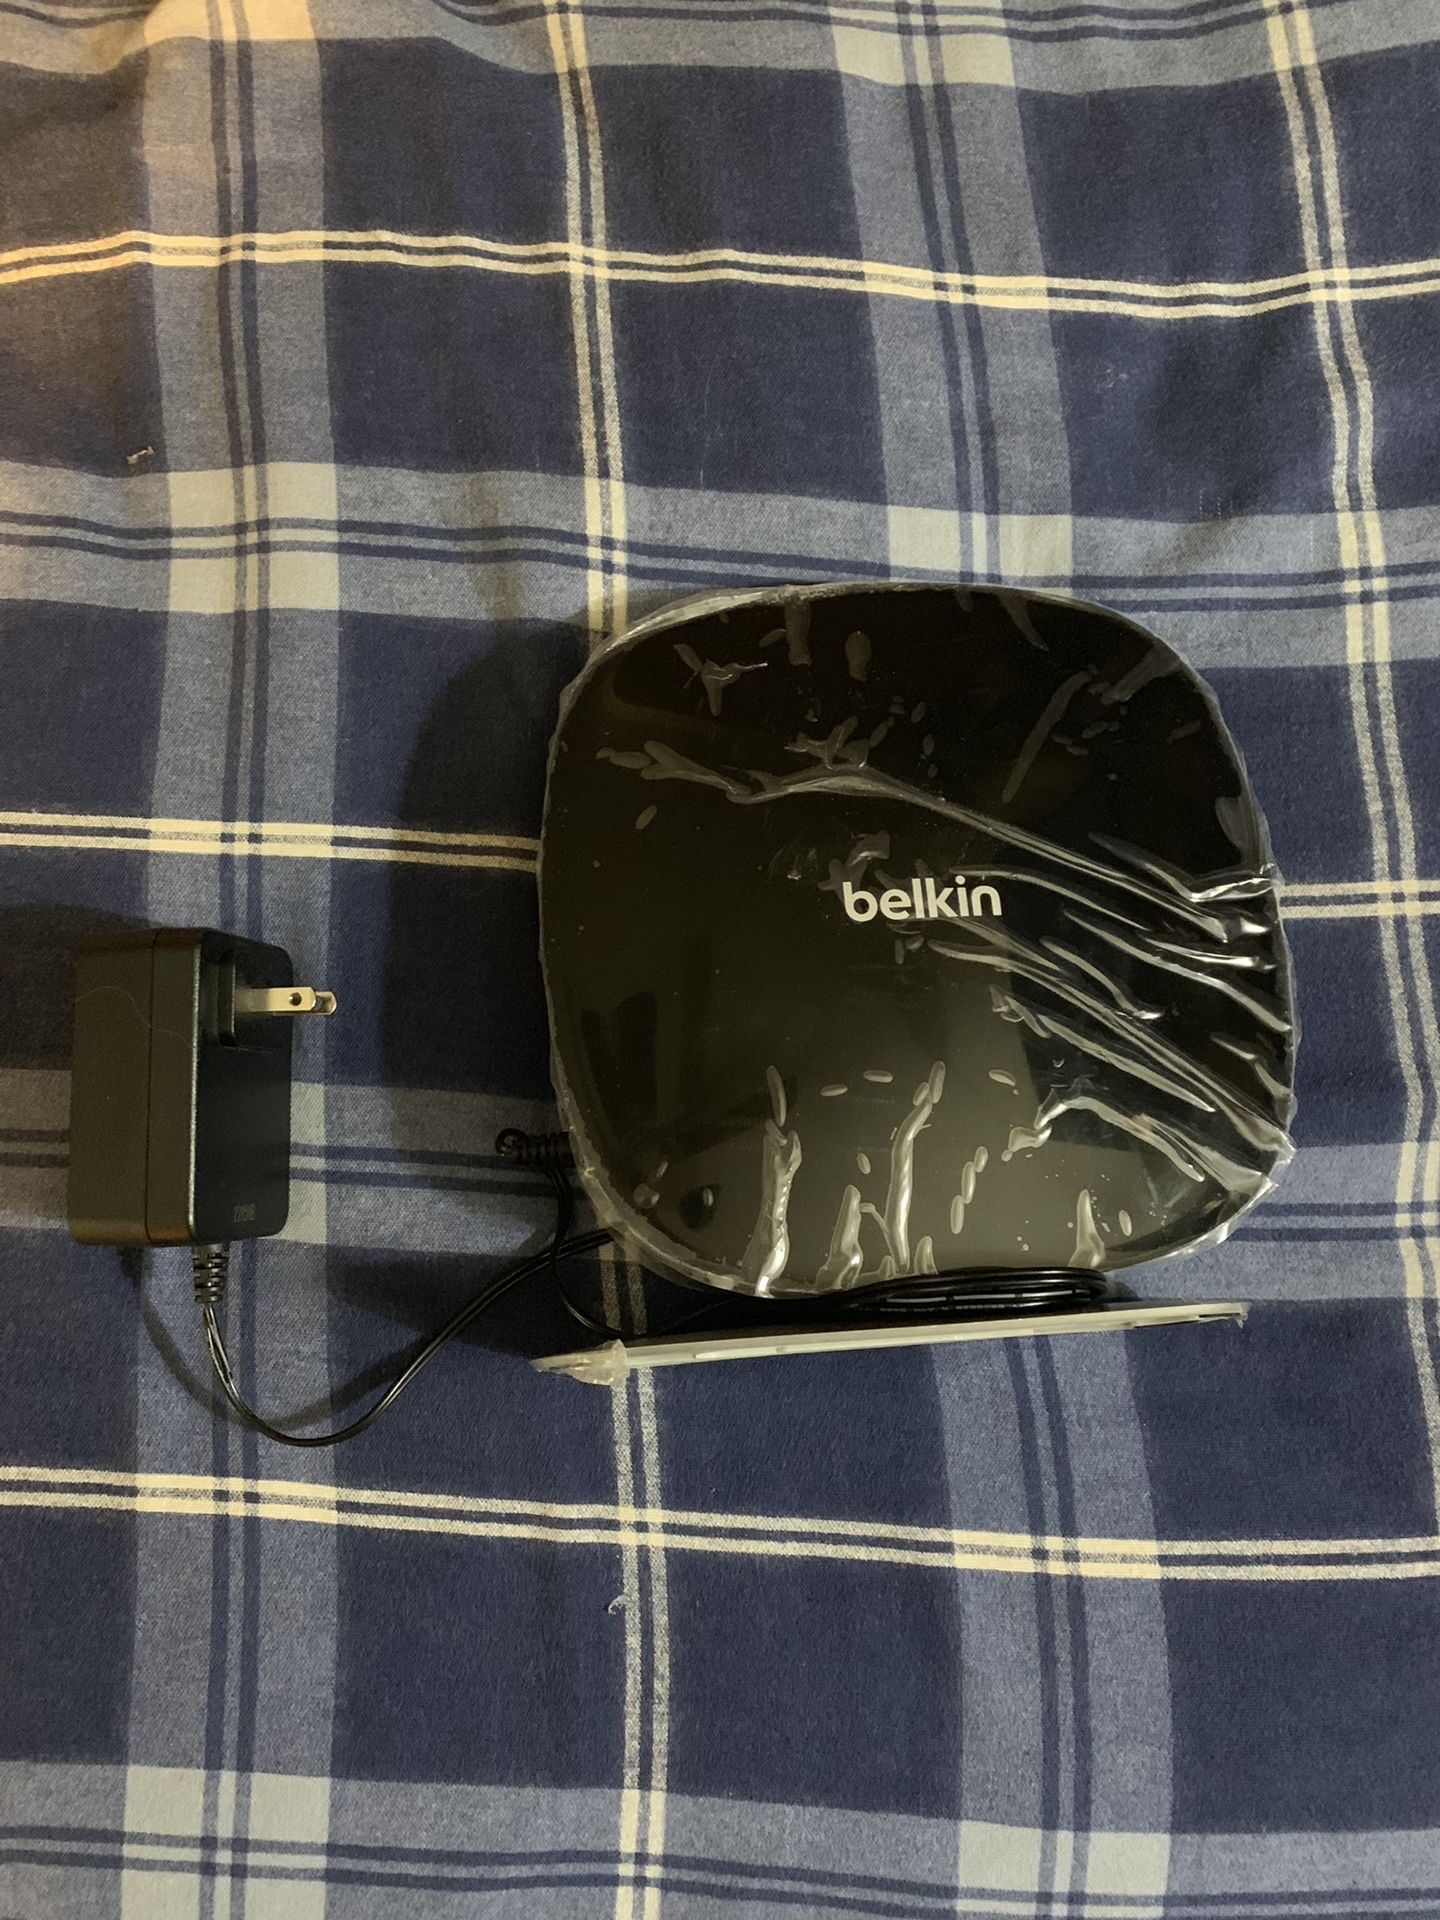 Belkin AC 1750 DB Wi-Fi Dual-Band AC+ Gigabit Router